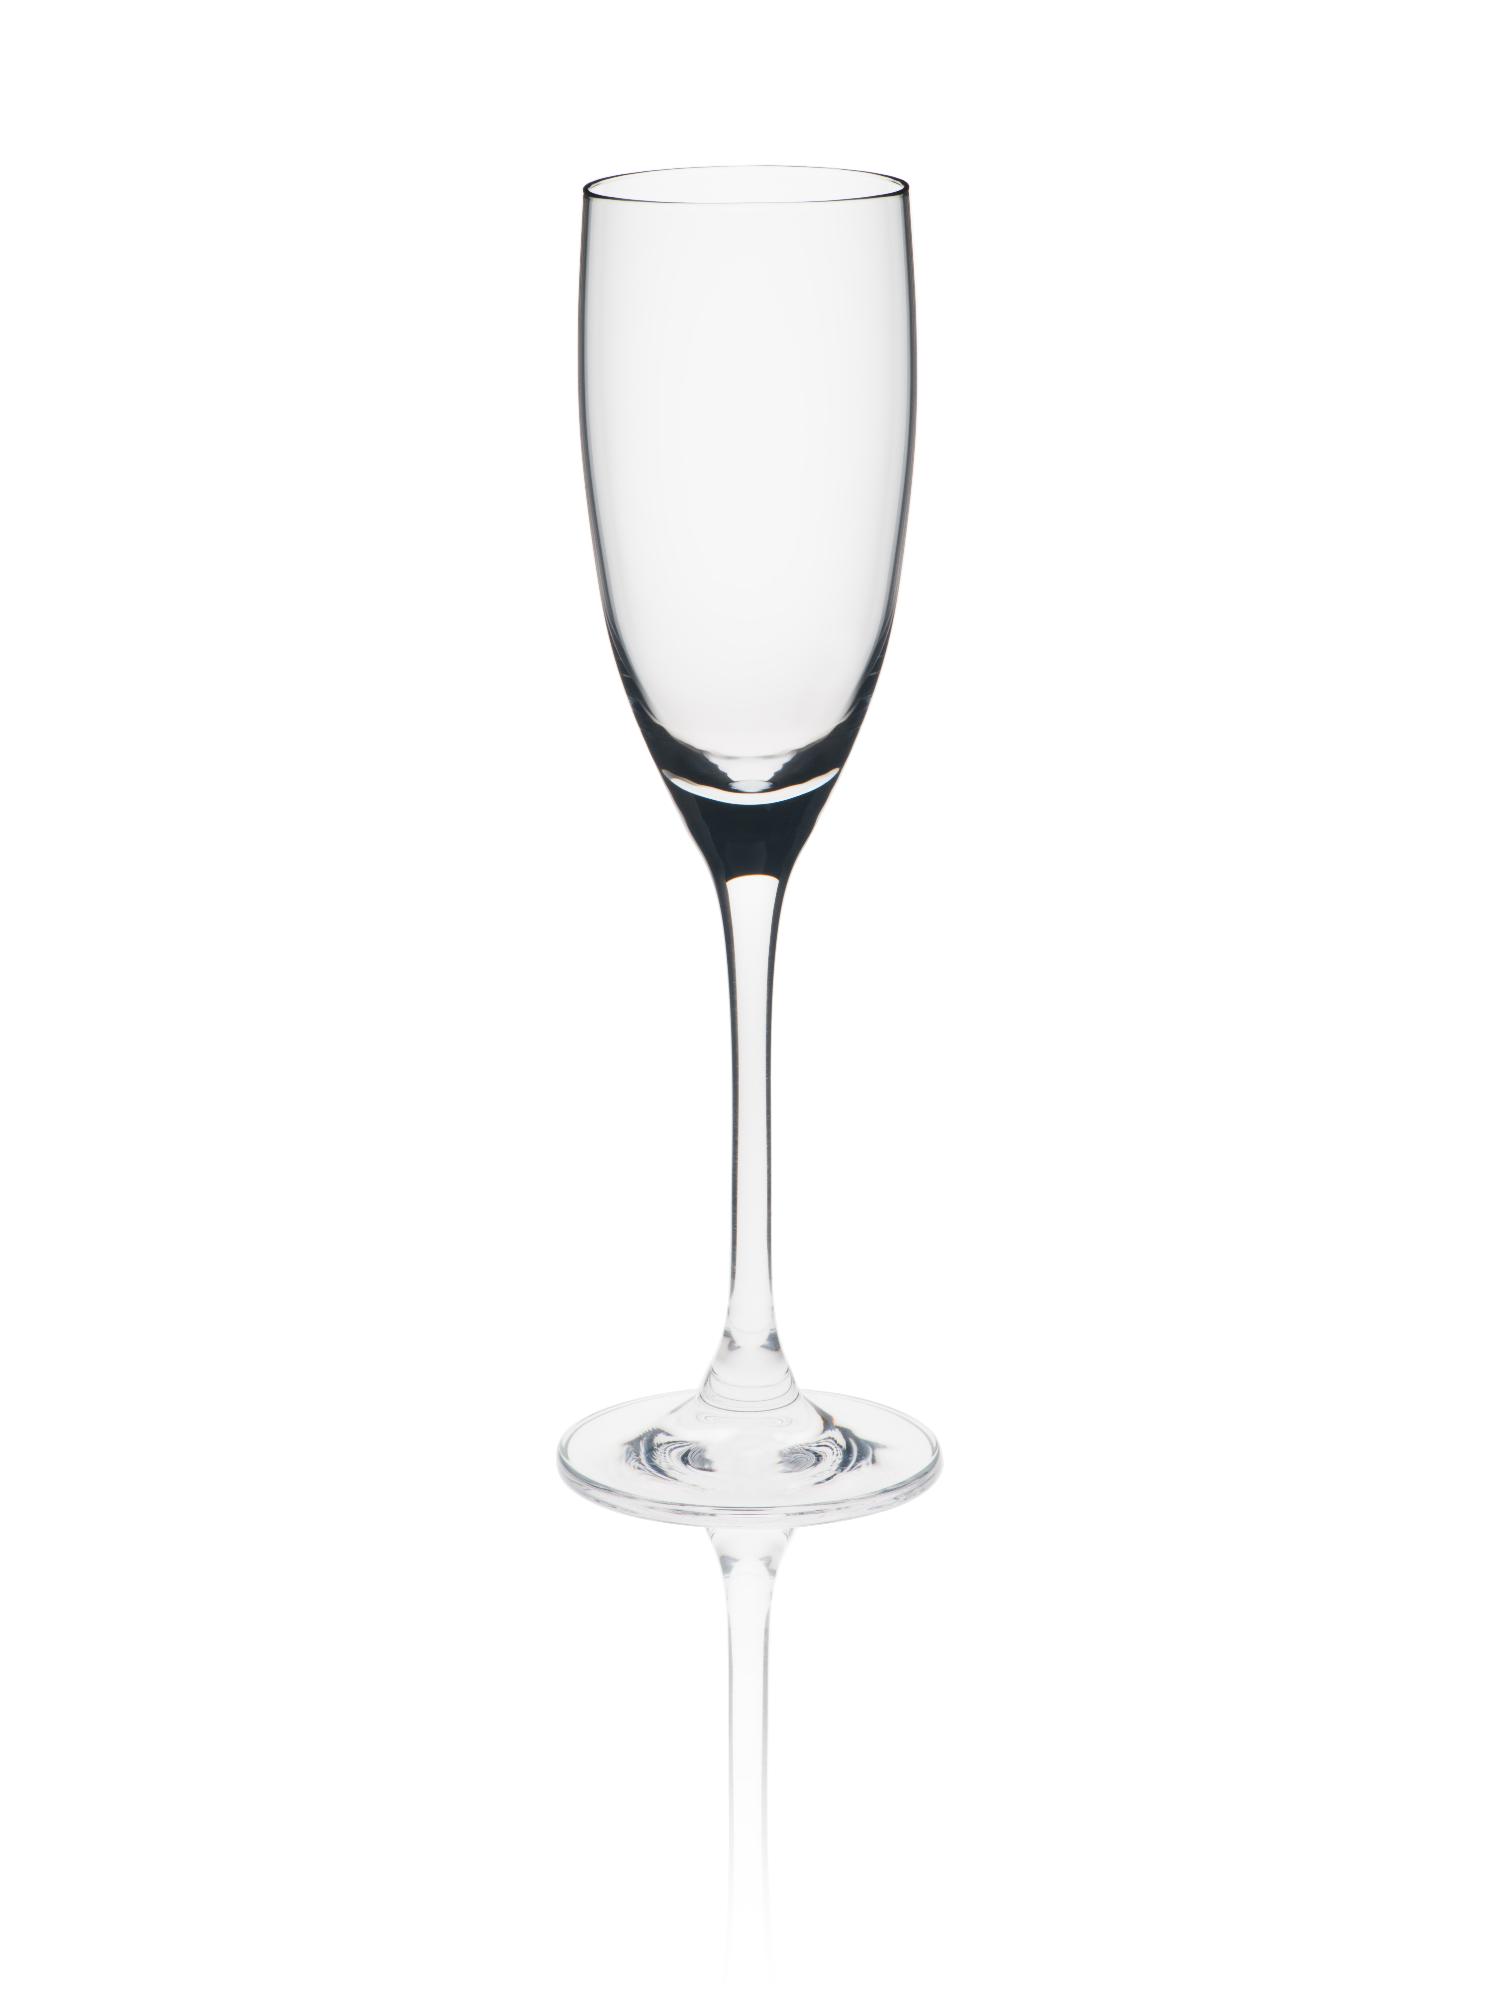 Ratio champagne glass, 150ml